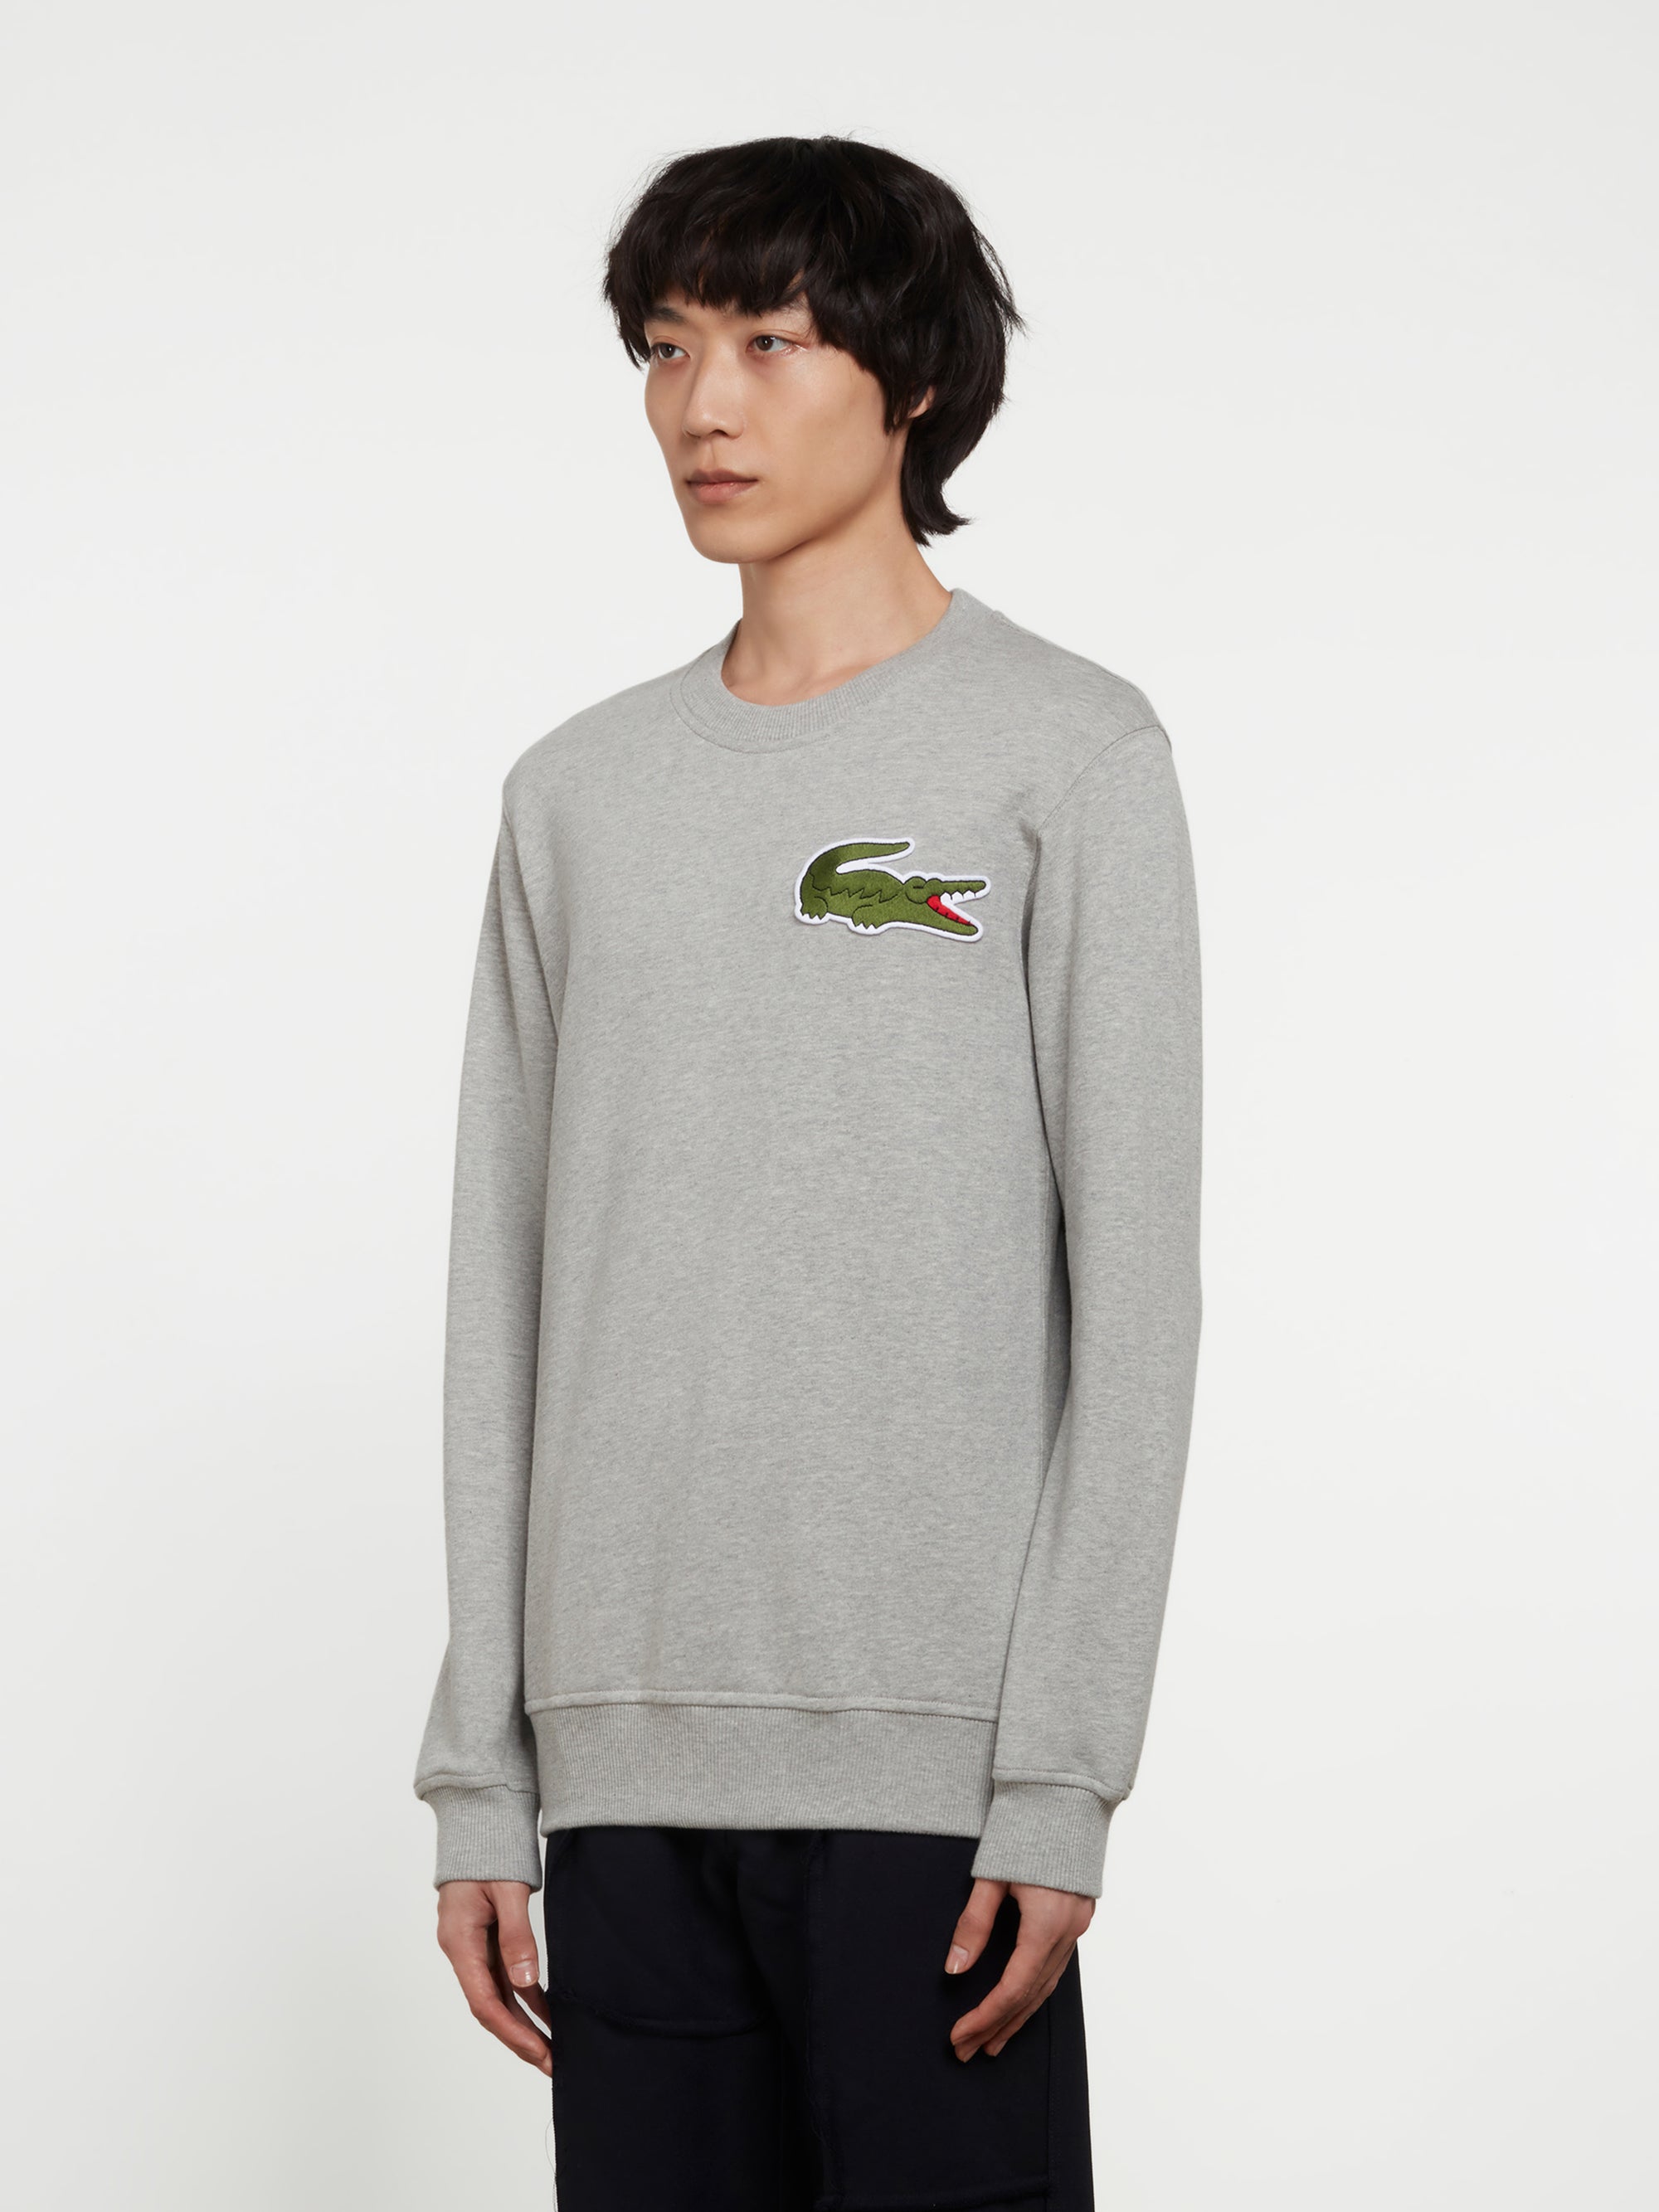 CDG Shirt - Lacoste Men's Cotton Sweatshirt - (Grey) view 2